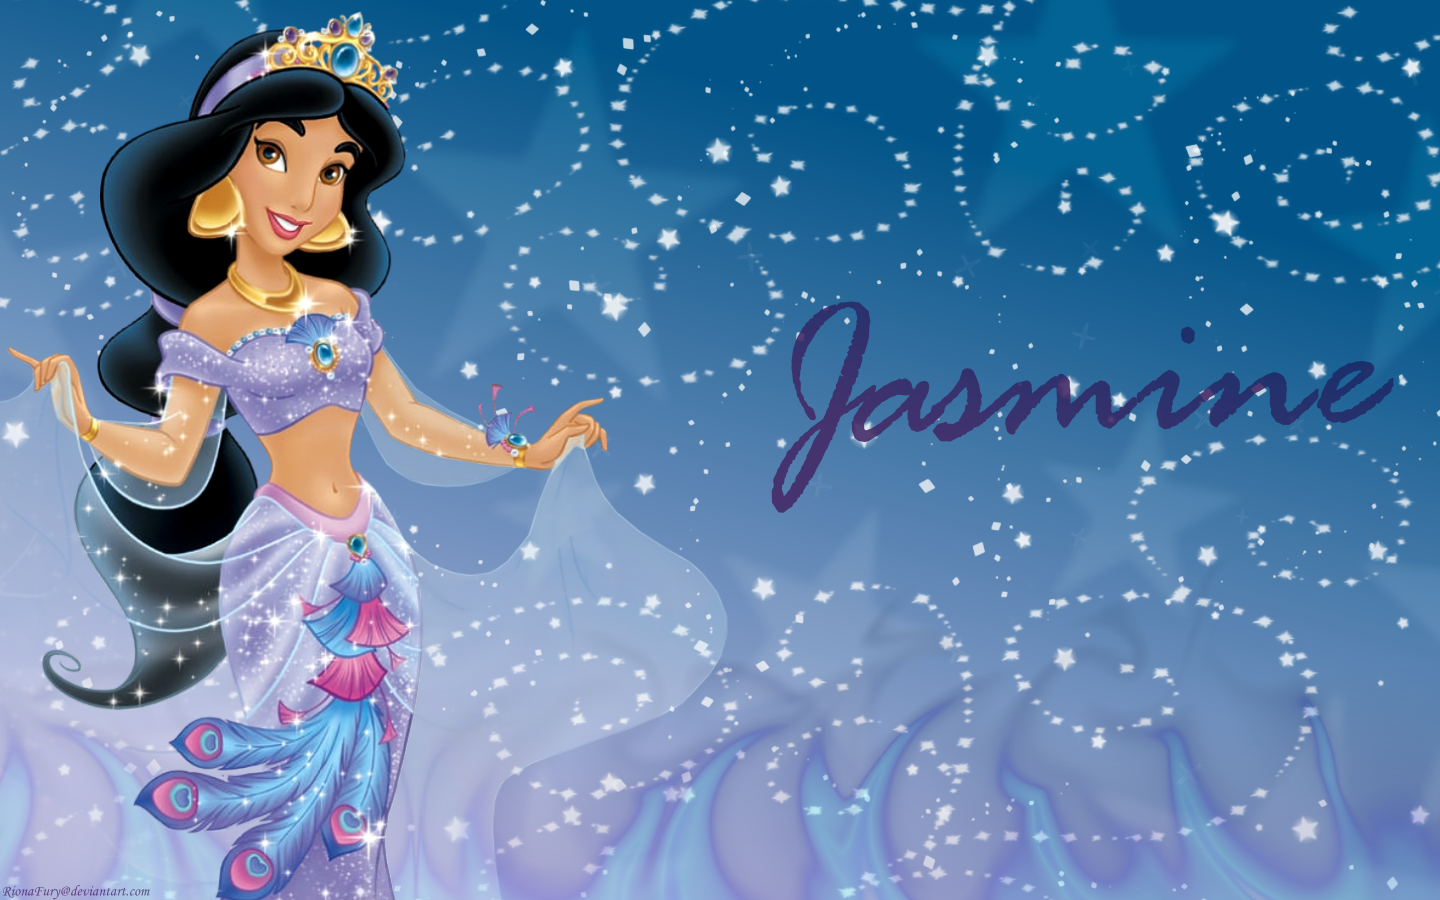 Jasmine Disney Princess Wallpaper